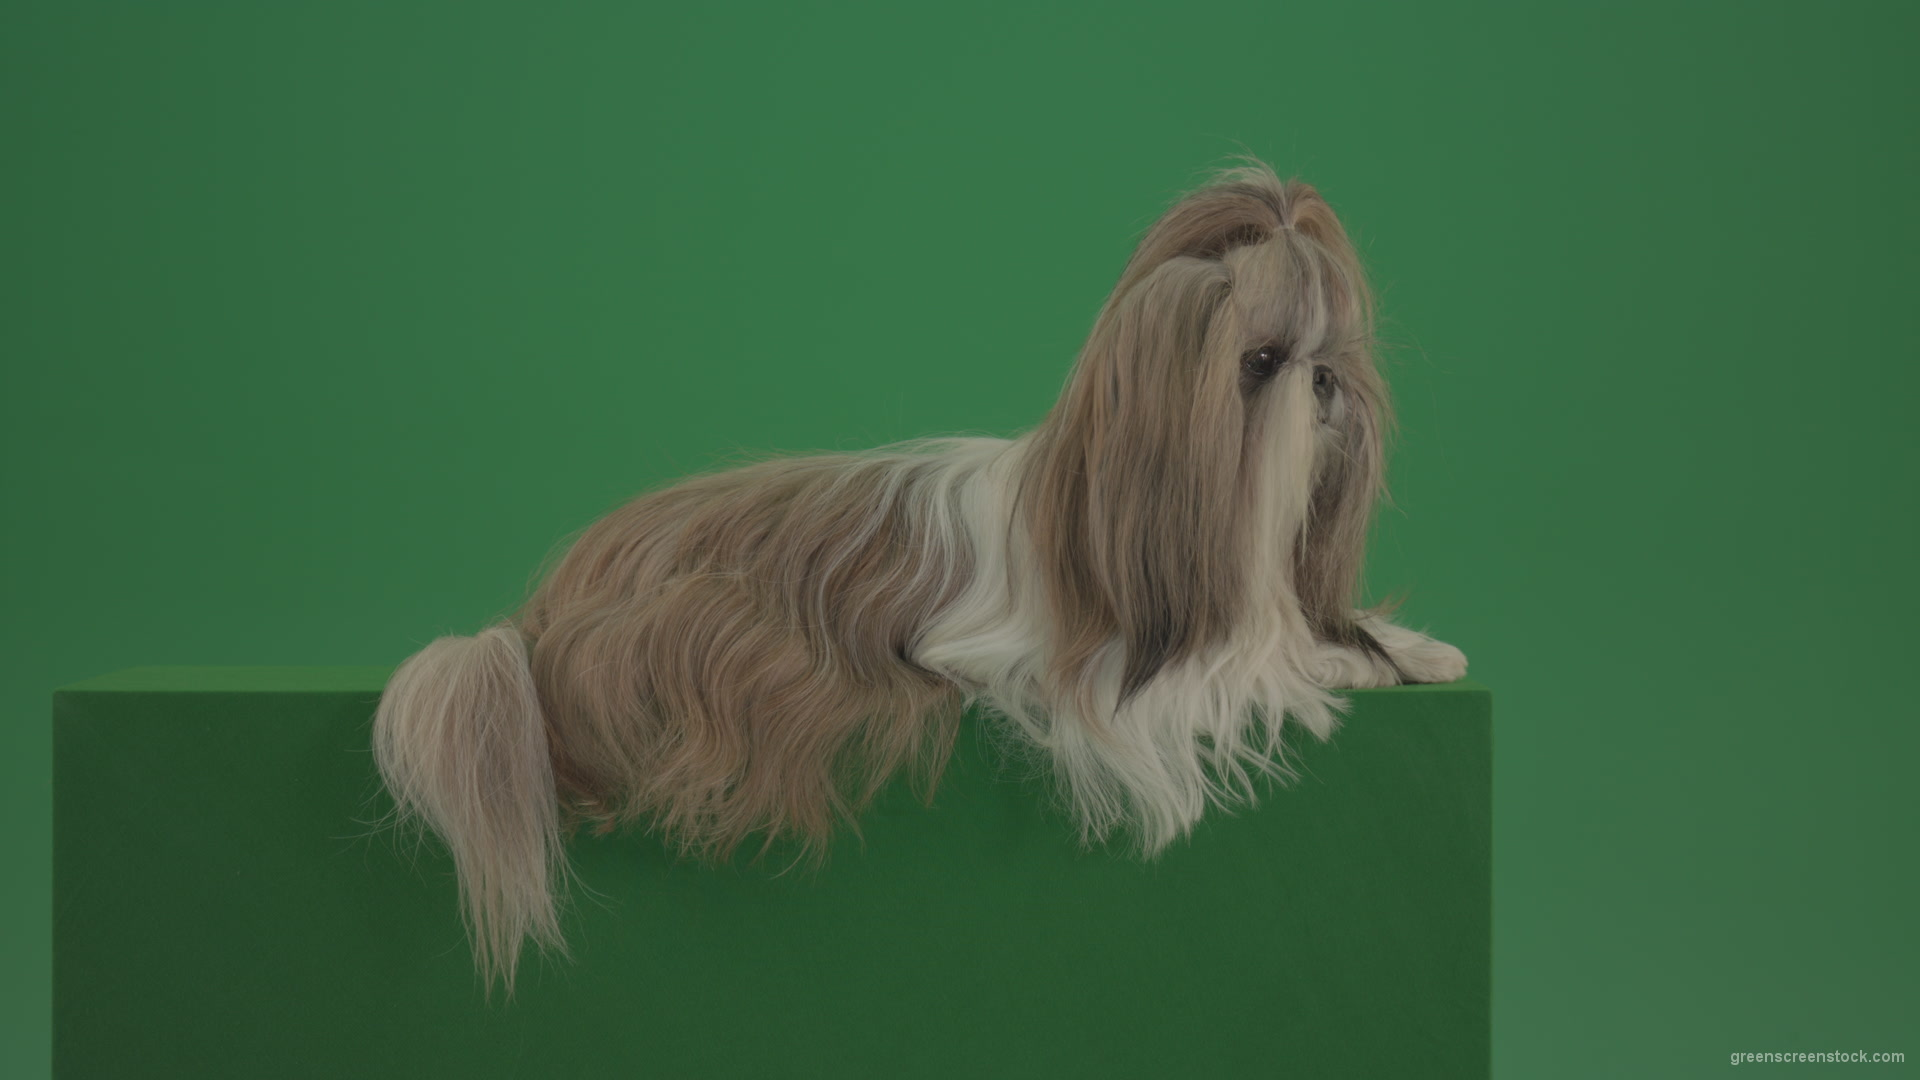 Luxury-bright-hair-Shihtzu-dog-pet-relaxing-on-green-screen-4K_001 Green Screen Stock